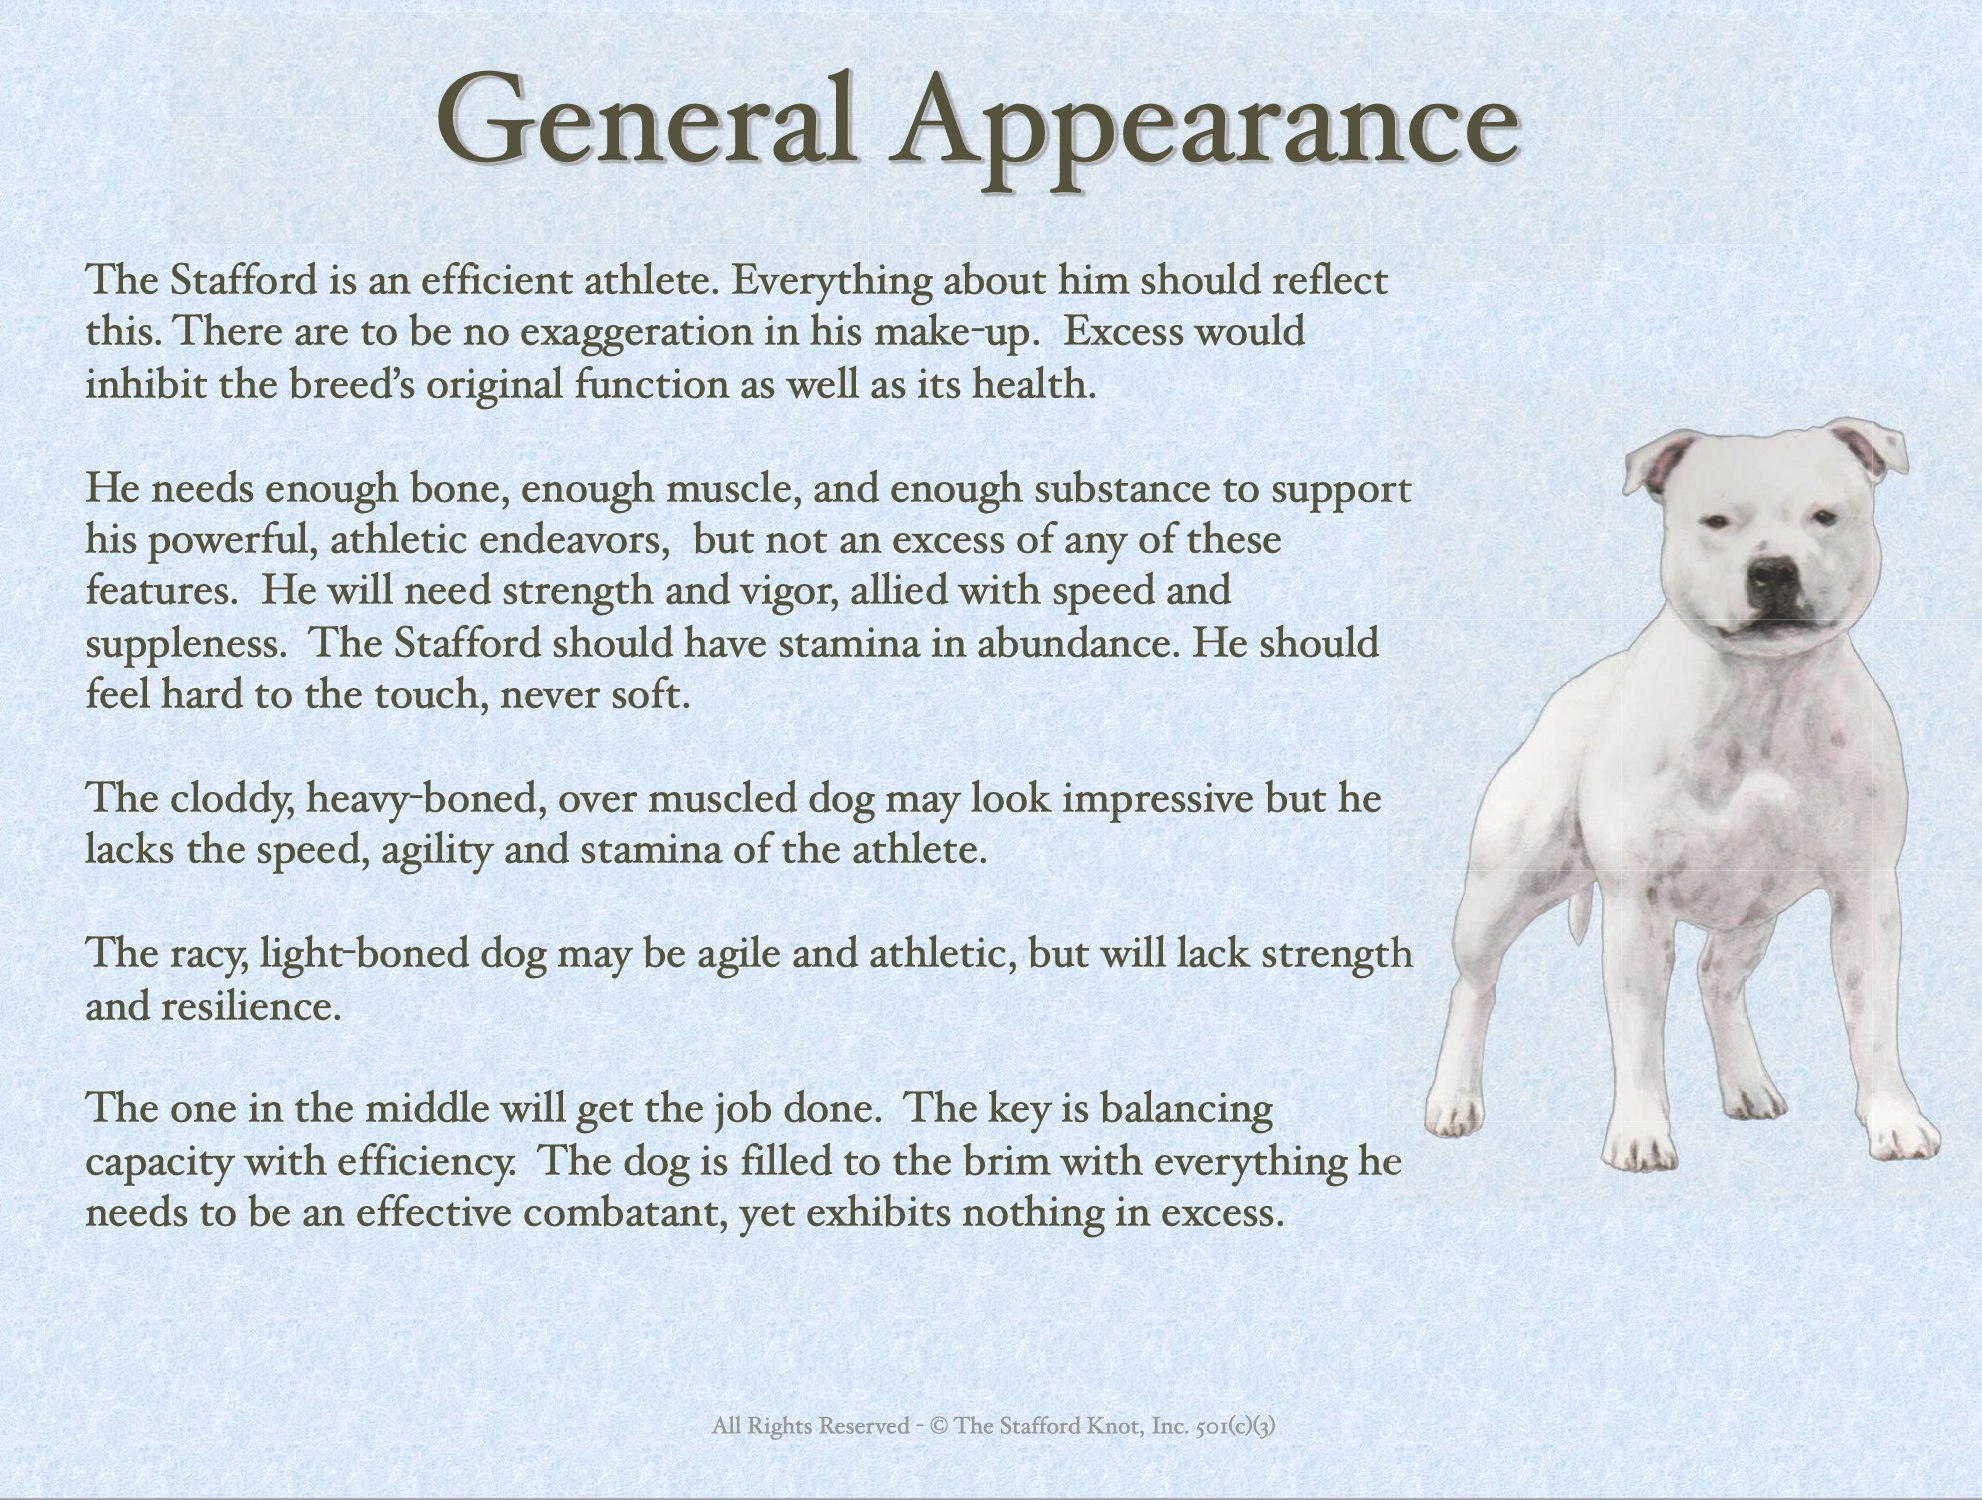 Staffordshire Bull Terrier (Stafford): Characteristics & Care